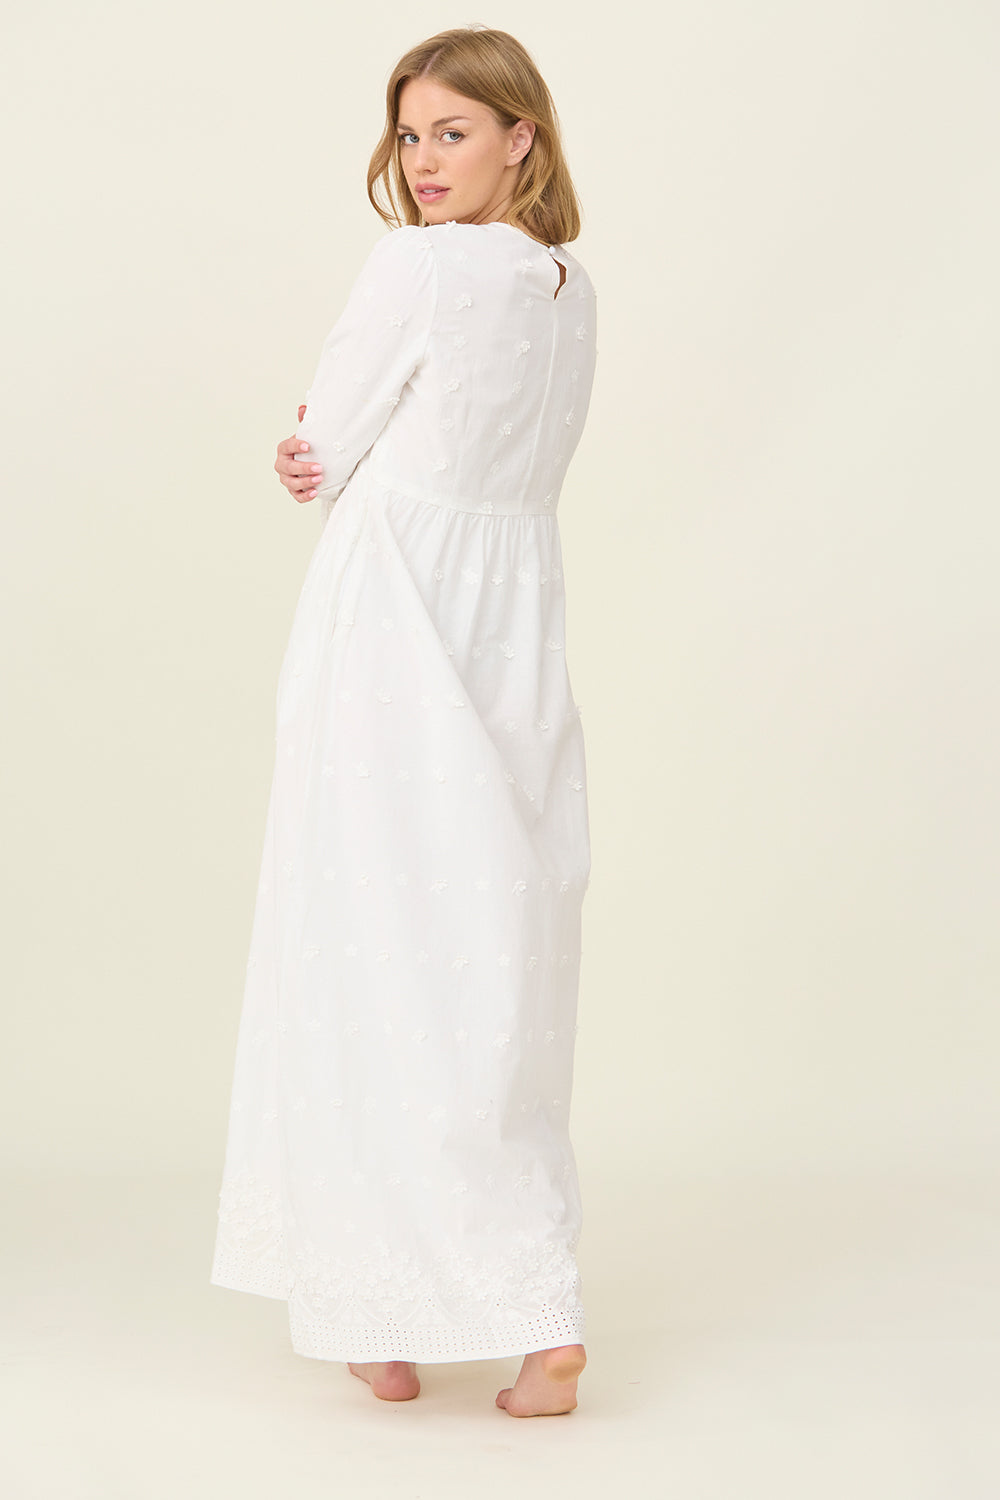 Florence White Temple Dress / Simple Wedding Dress